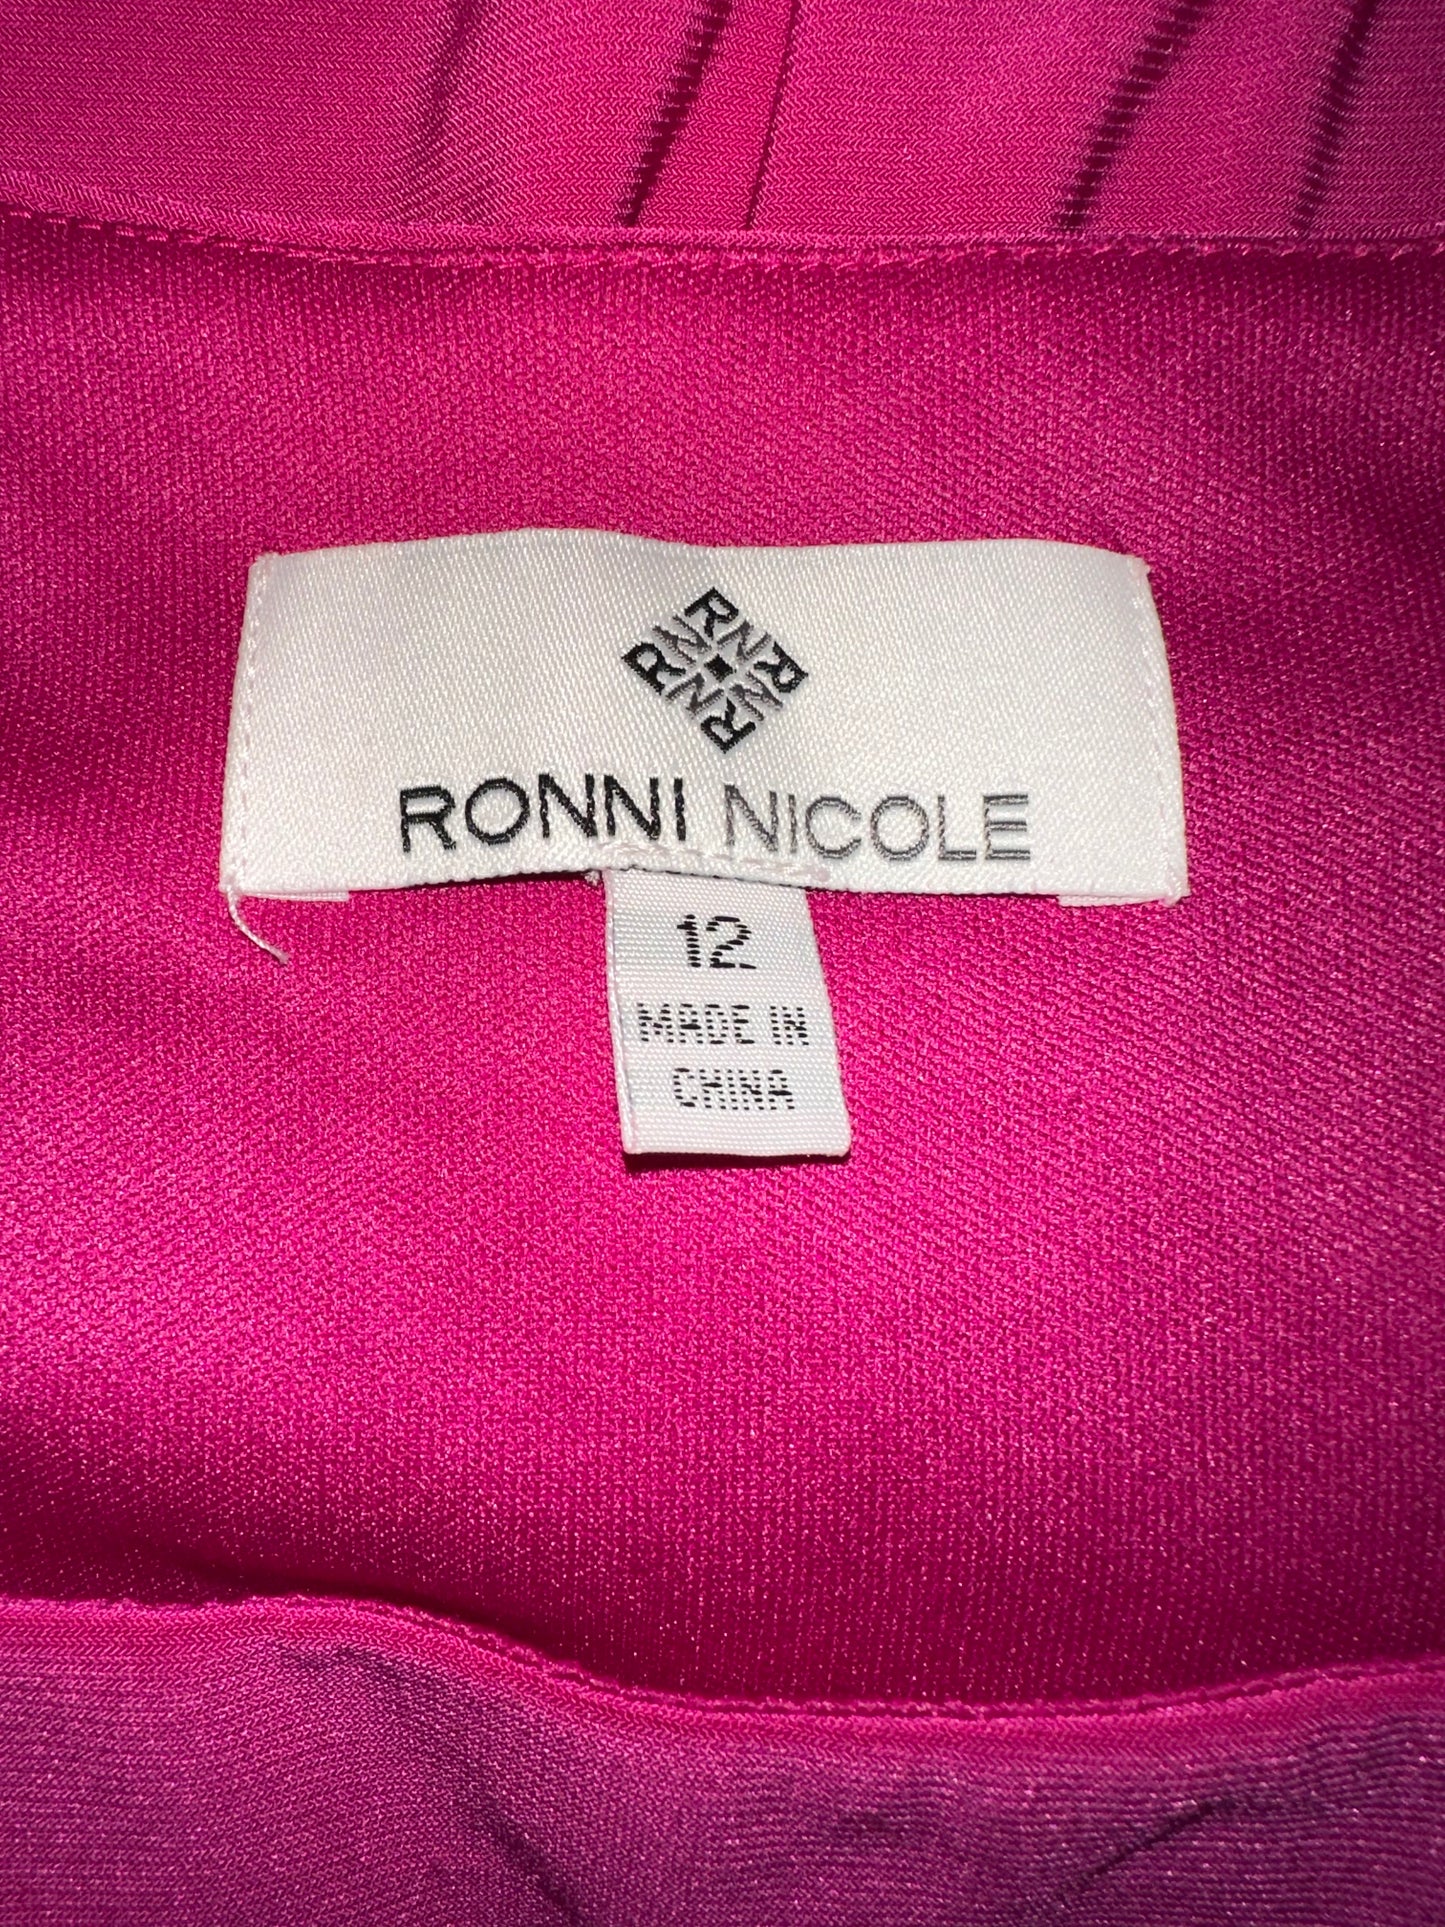 Ronni Nicole - Berry Pink Peplum Dress